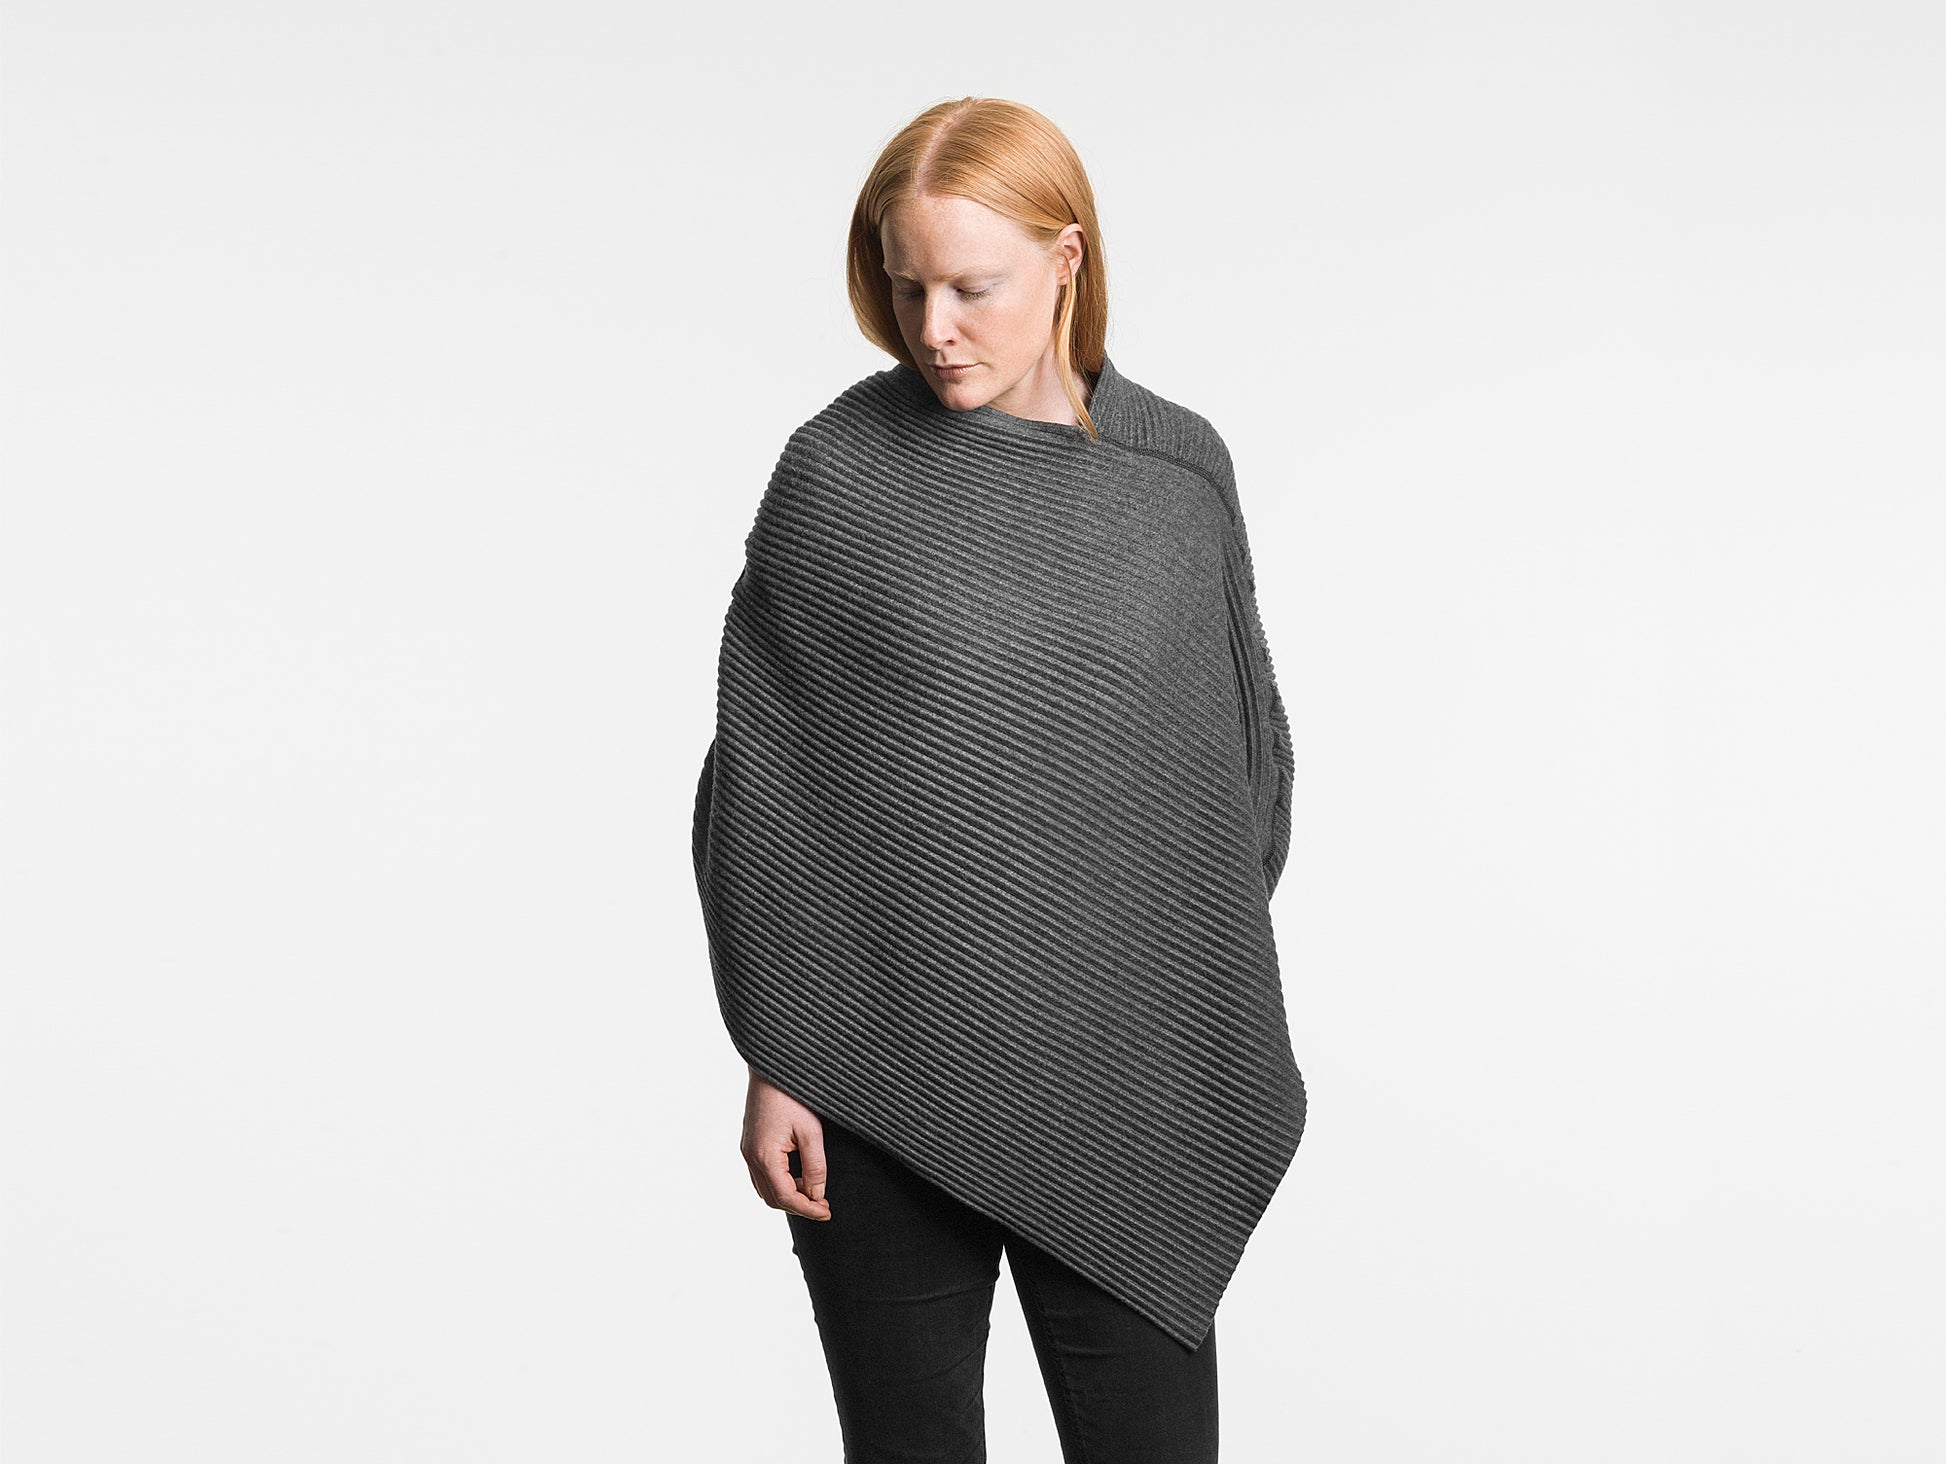 Dark Grey Pleece Short Poncho by Design House Stockholm